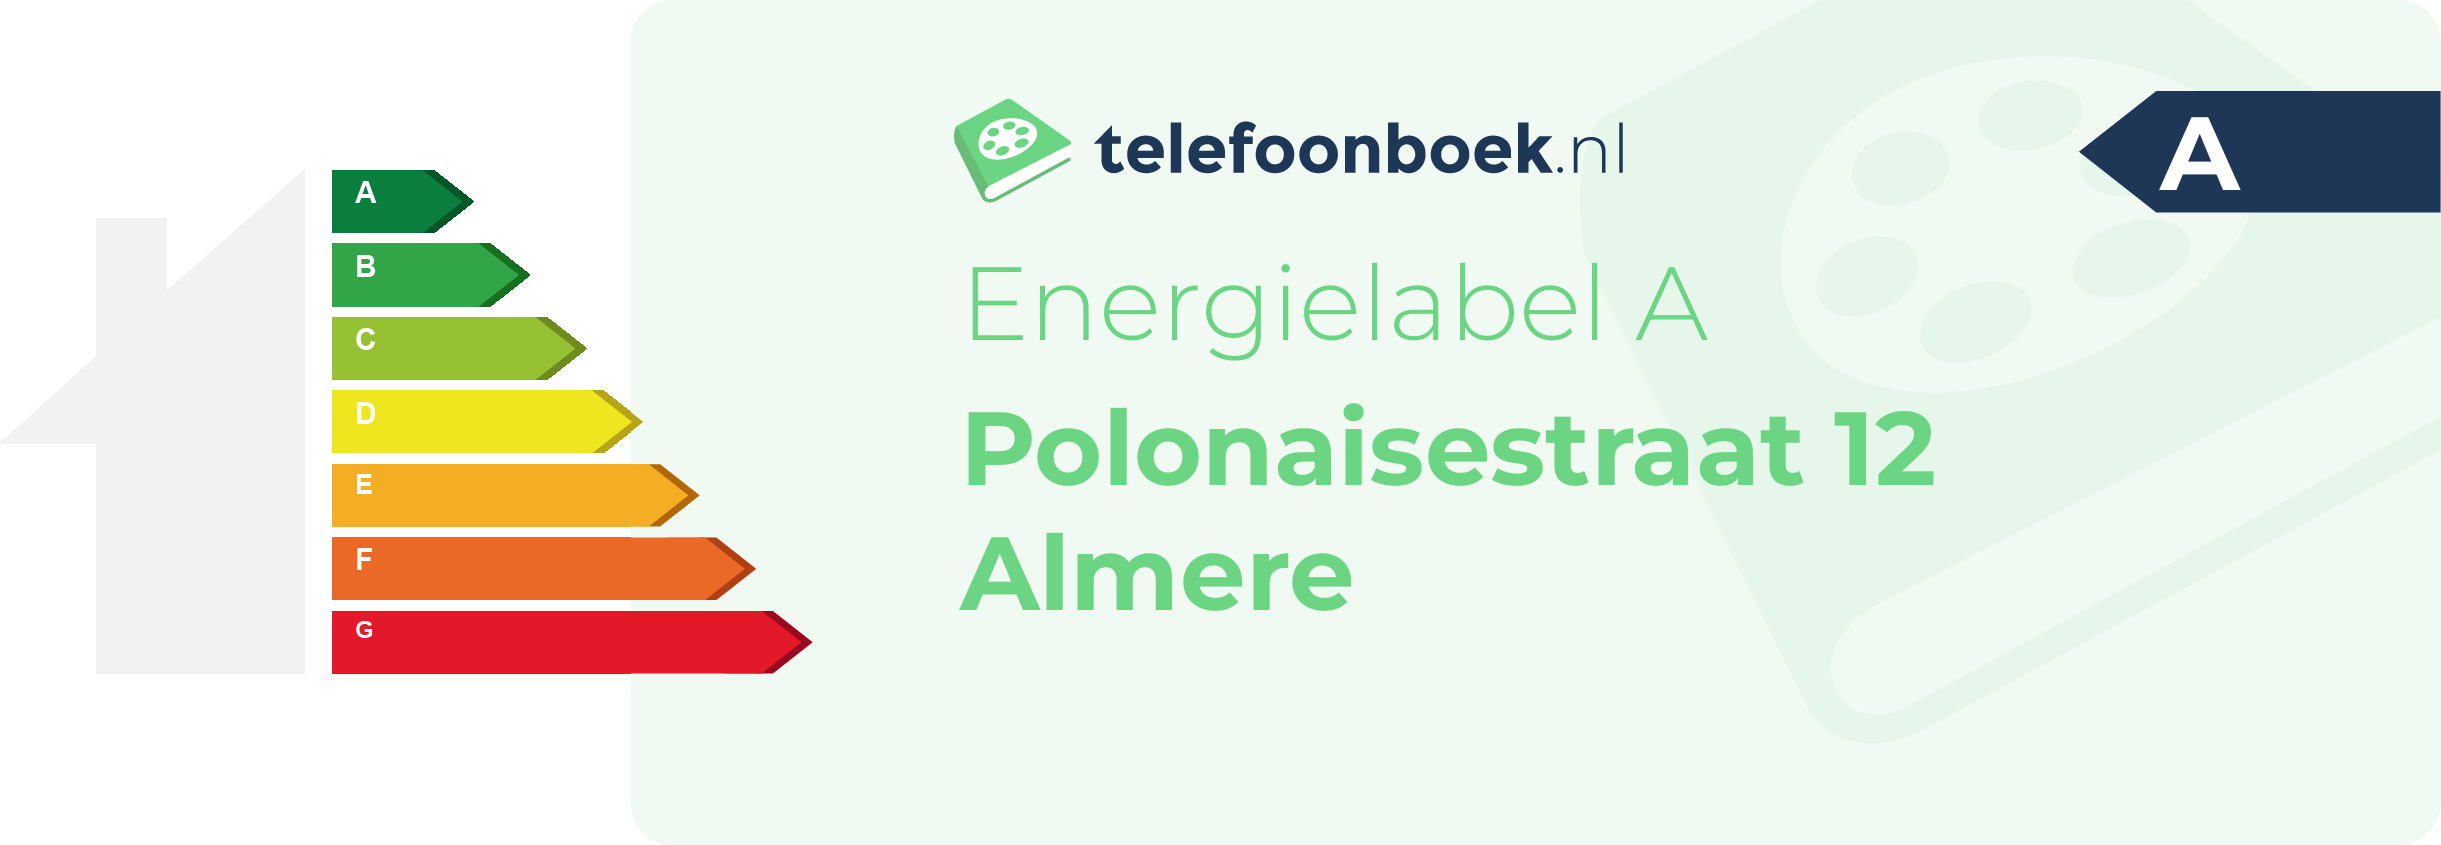 Energielabel Polonaisestraat 12 Almere